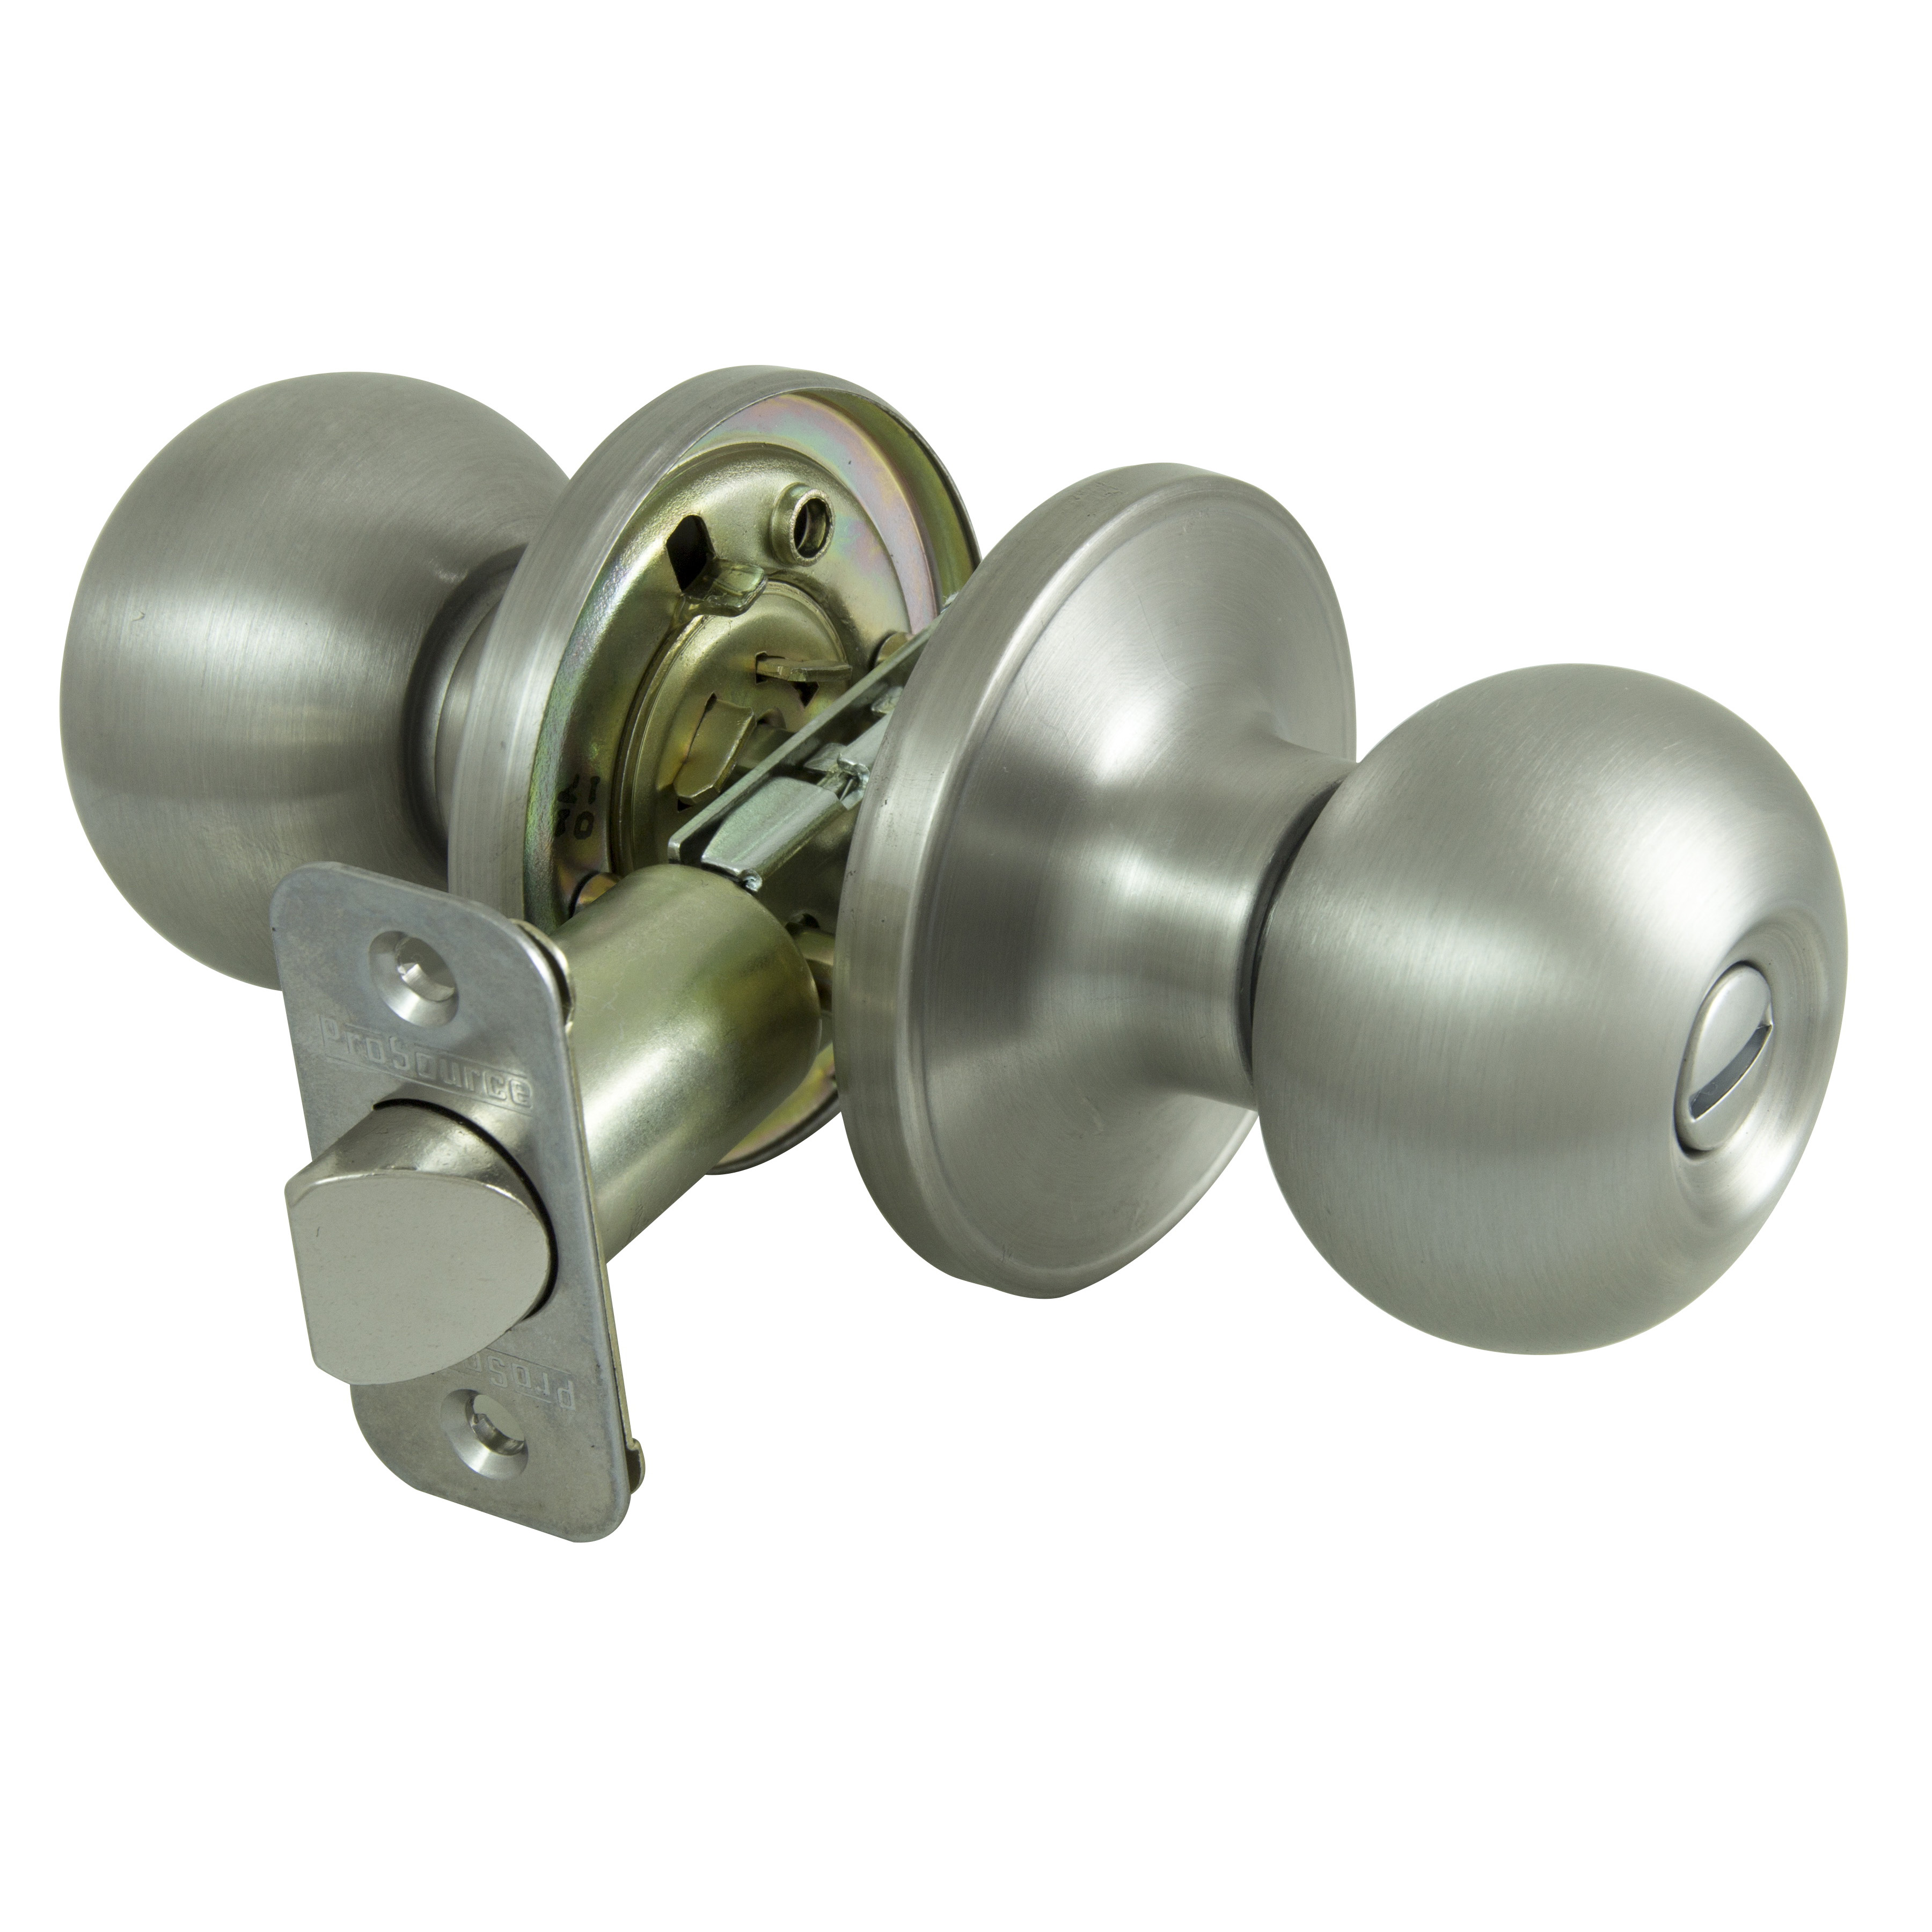 Privacy Lockset, Ball Design, Stainless Steel